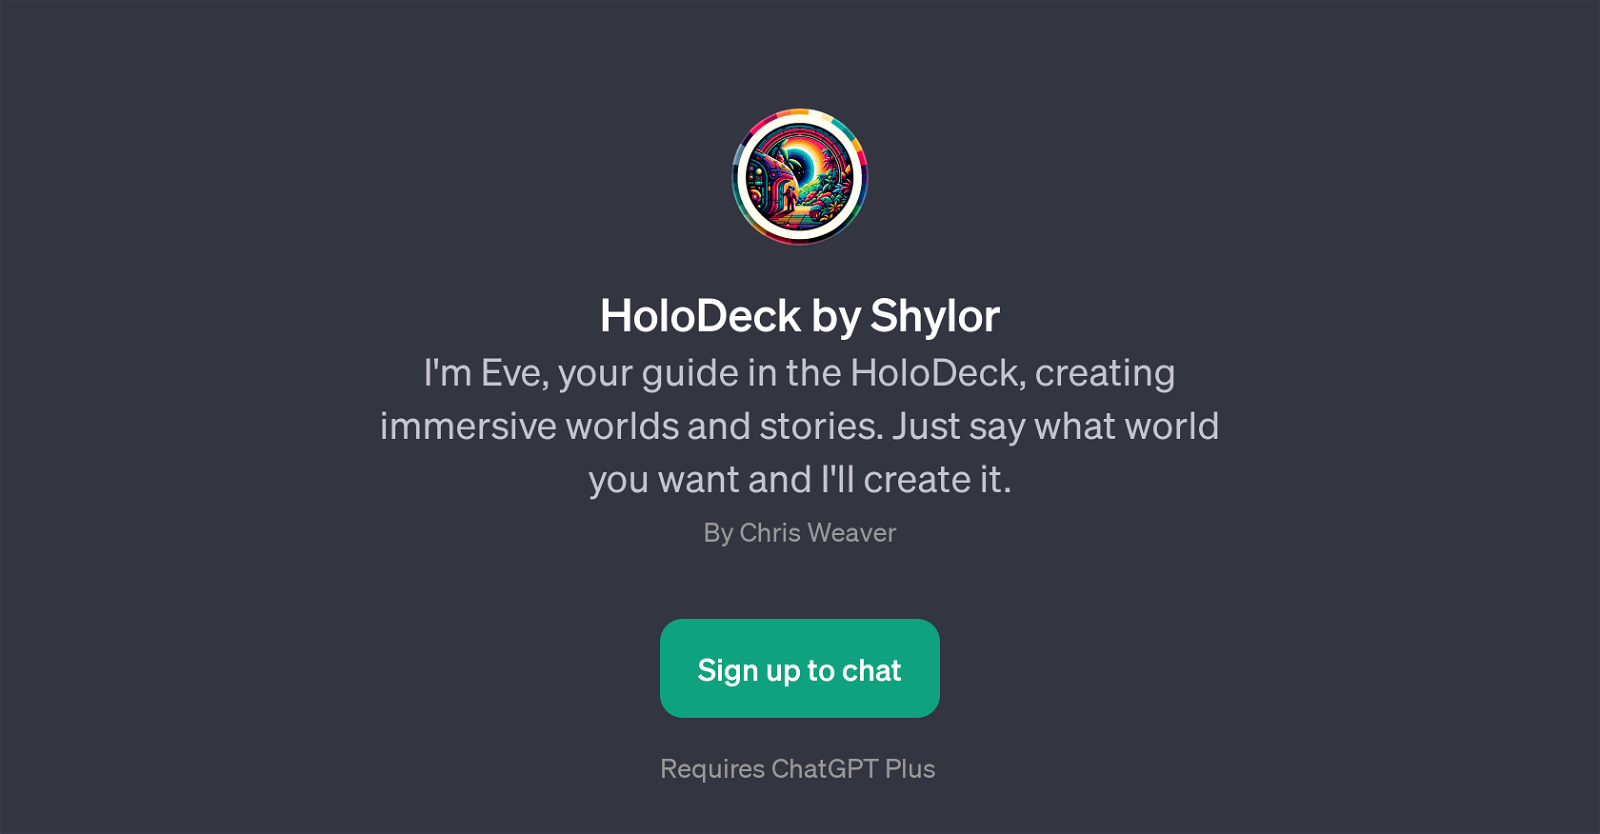 HoloDeck by Shylor website